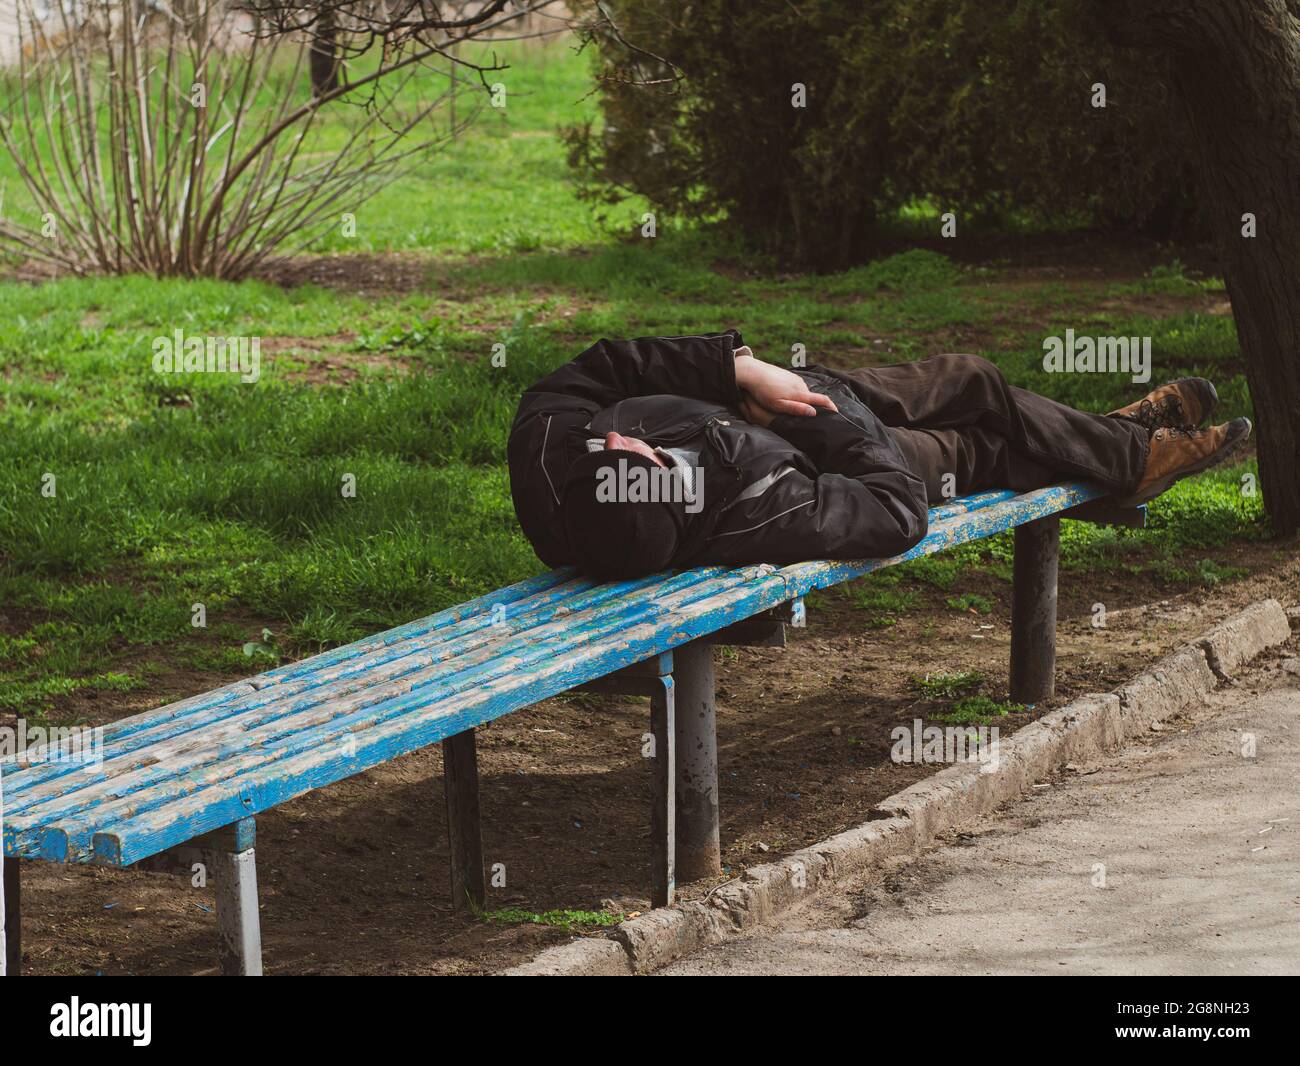 Sleeping homeless man on bench in the park with green grass. Drunk vagabond. Berdiansk, Ukraine - 18 april 2021 Stock Photo